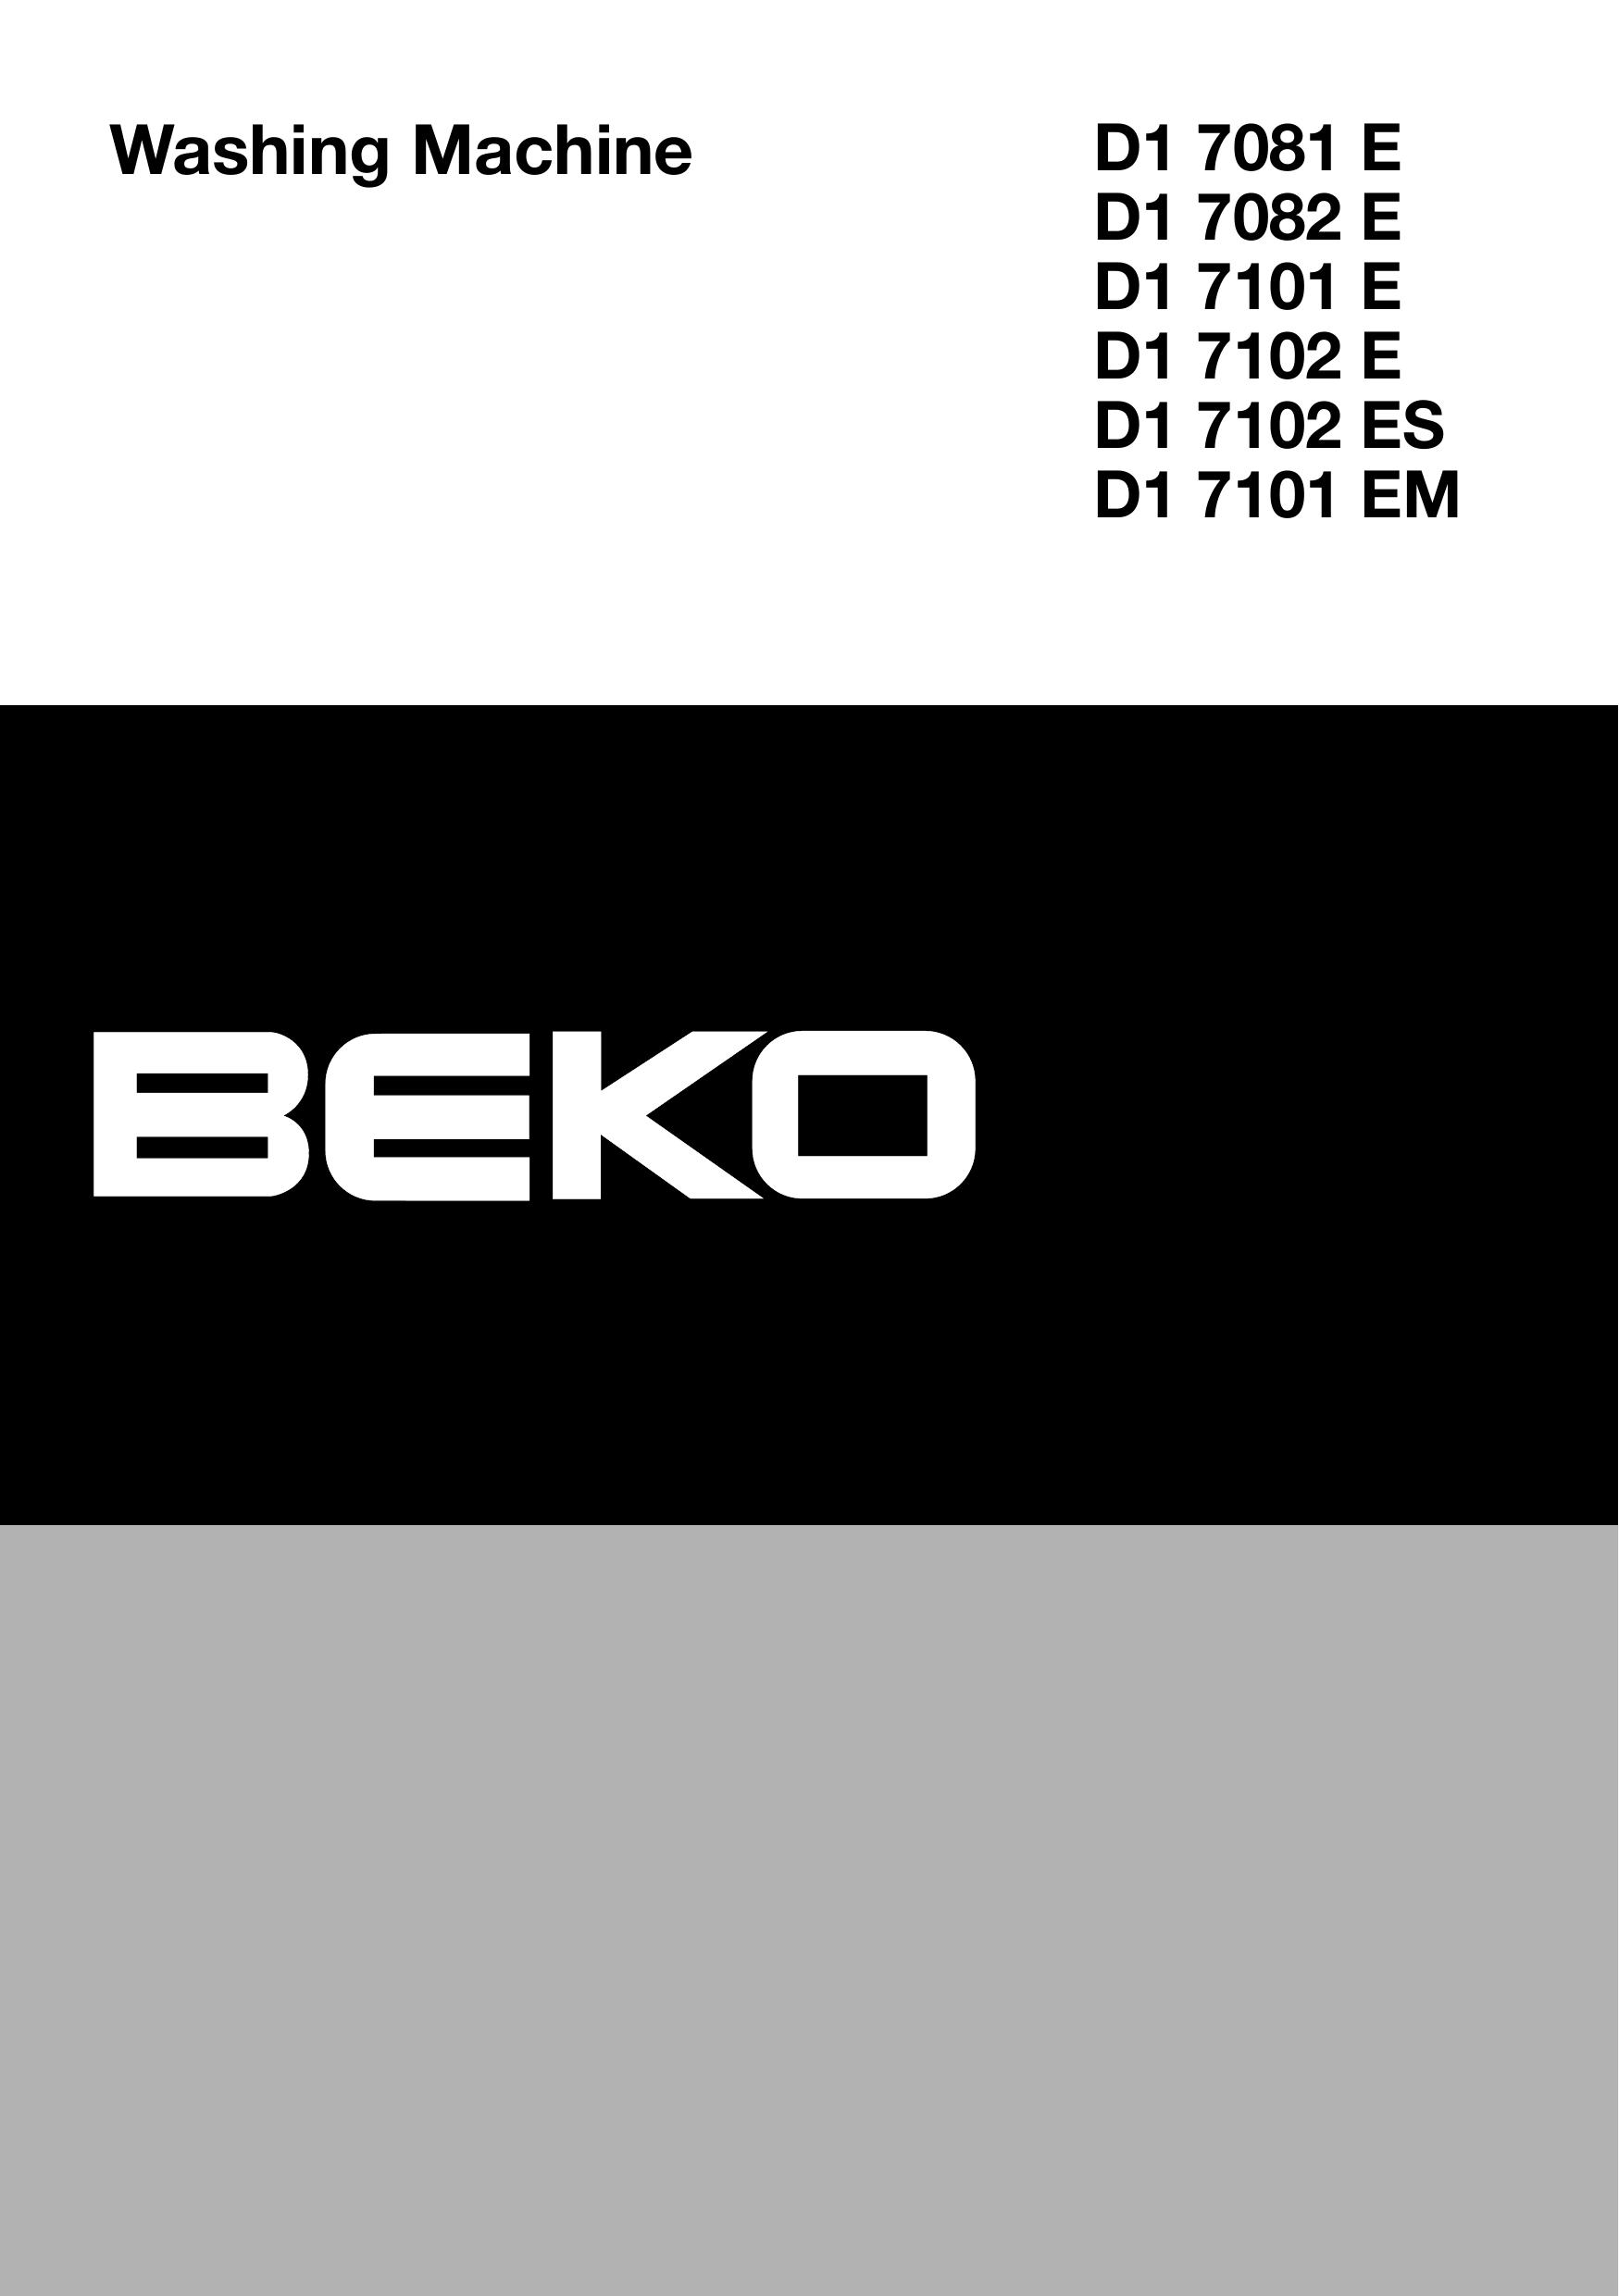 Beko D1 7082 E Washer User Manual